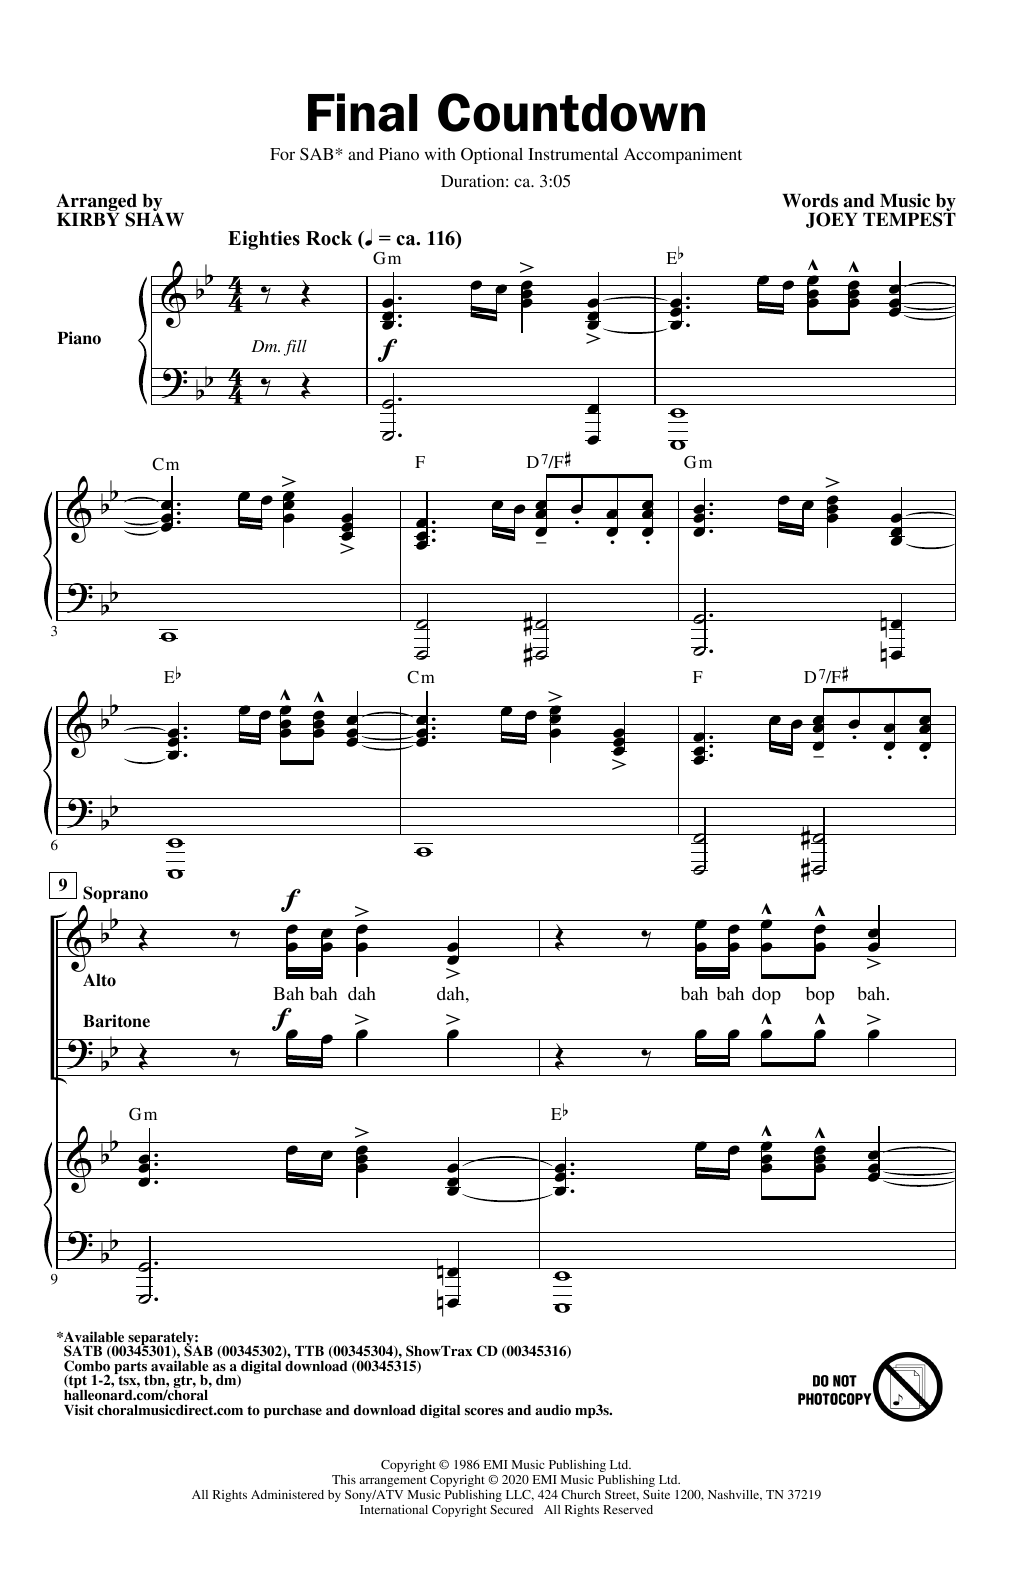 Europe Final Countdown (arr. Kirby Shaw) Sheet Music Notes & Chords for SAB Choir - Download or Print PDF